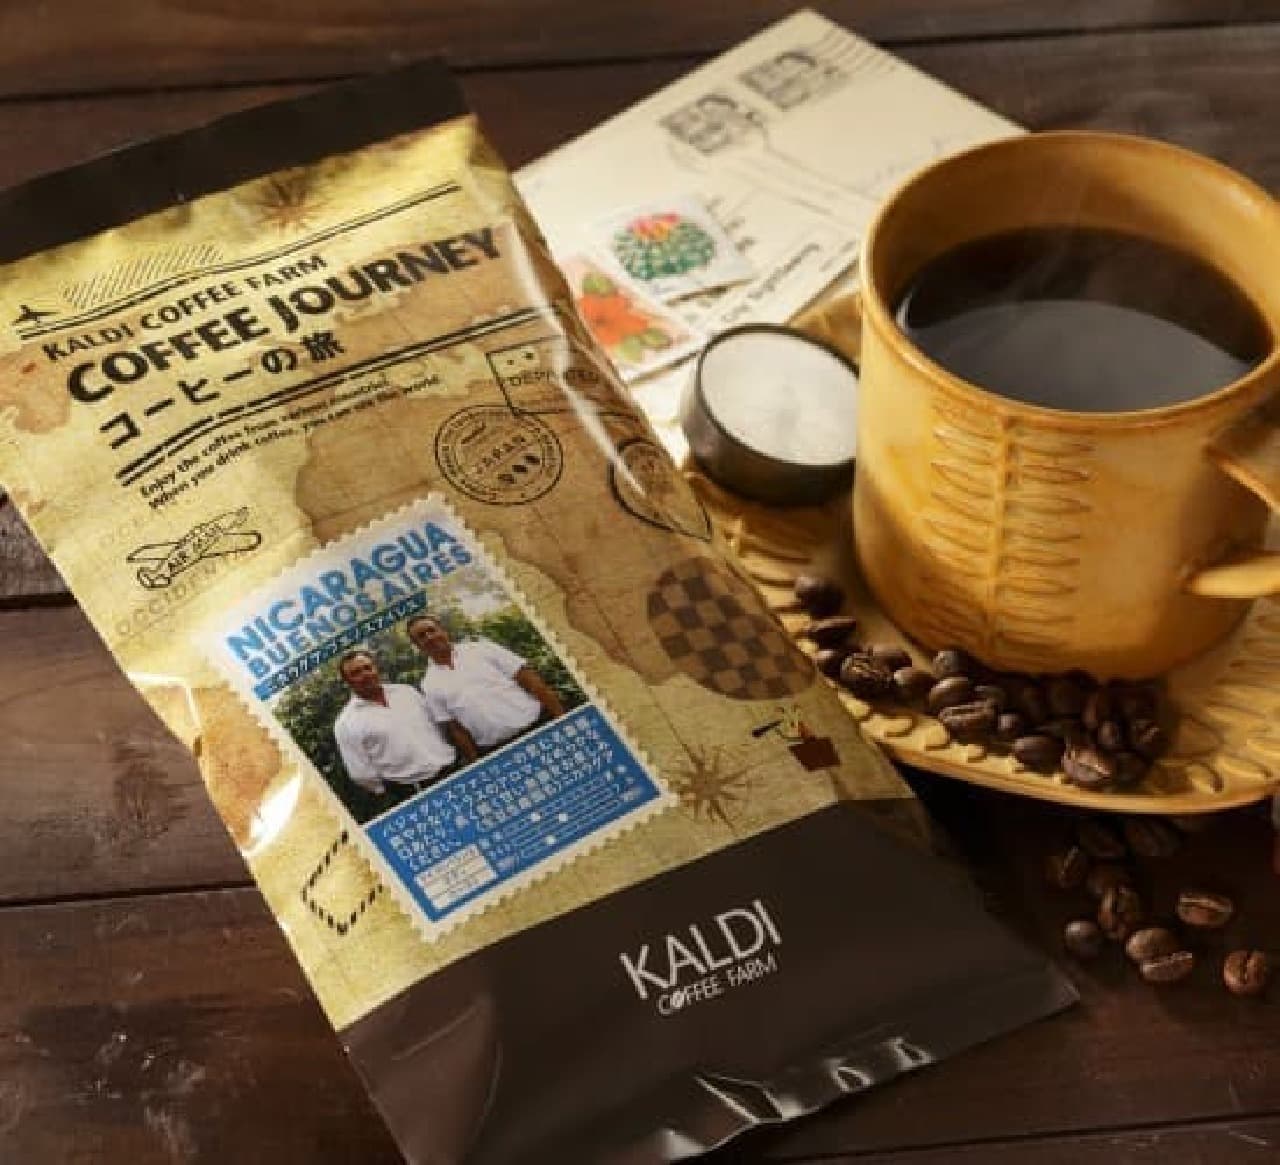 KALDI Coffee Farm "Nicaragua Buenos Aires"